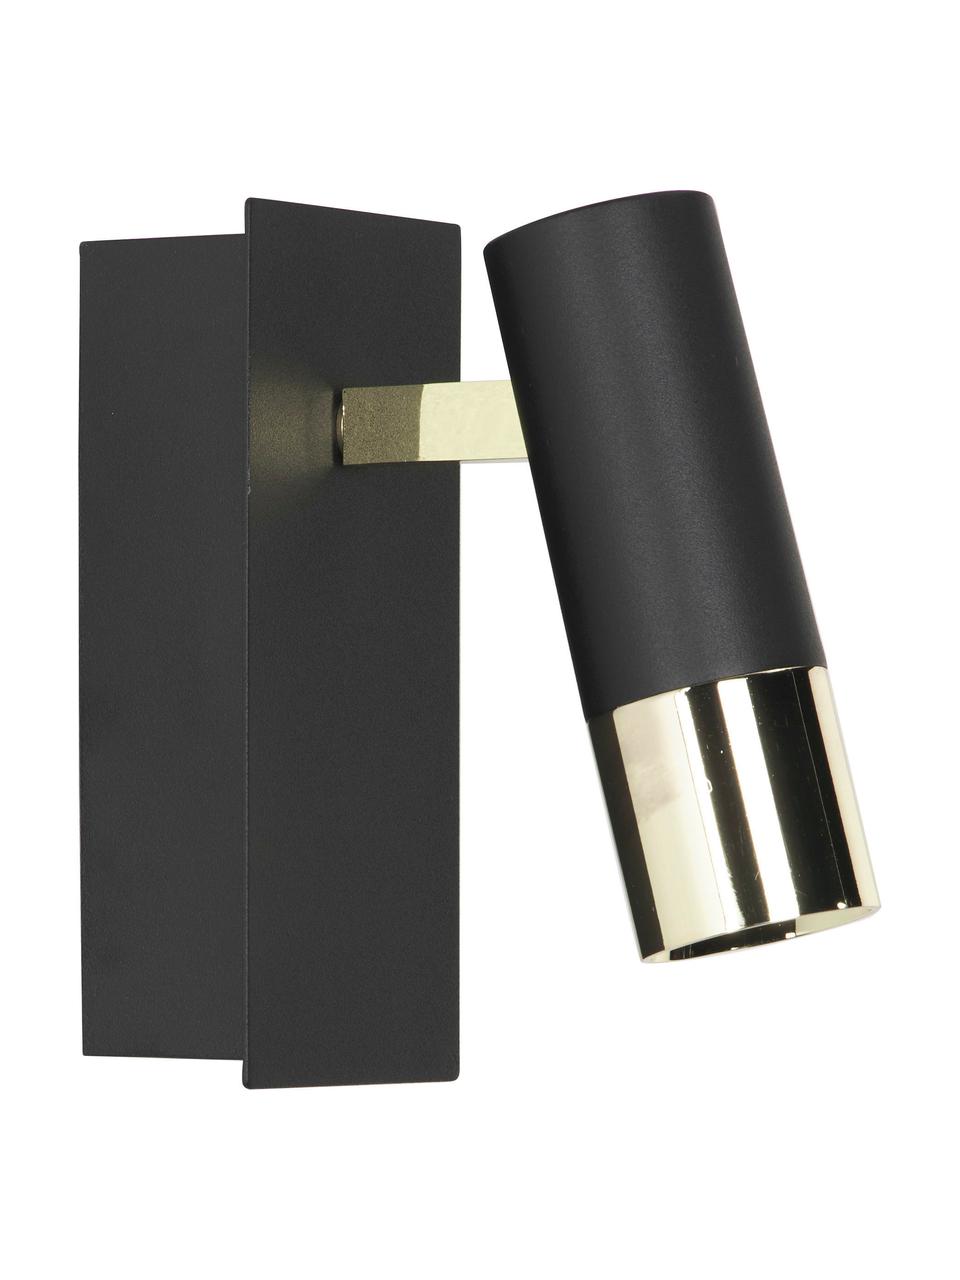 Verstelbare LED wandspot Bobby in zwart-goudkleur, Lampenkap: gepoedercoat metaal, gega, Zwart, goudkleurig, B 7 x H 15 cm